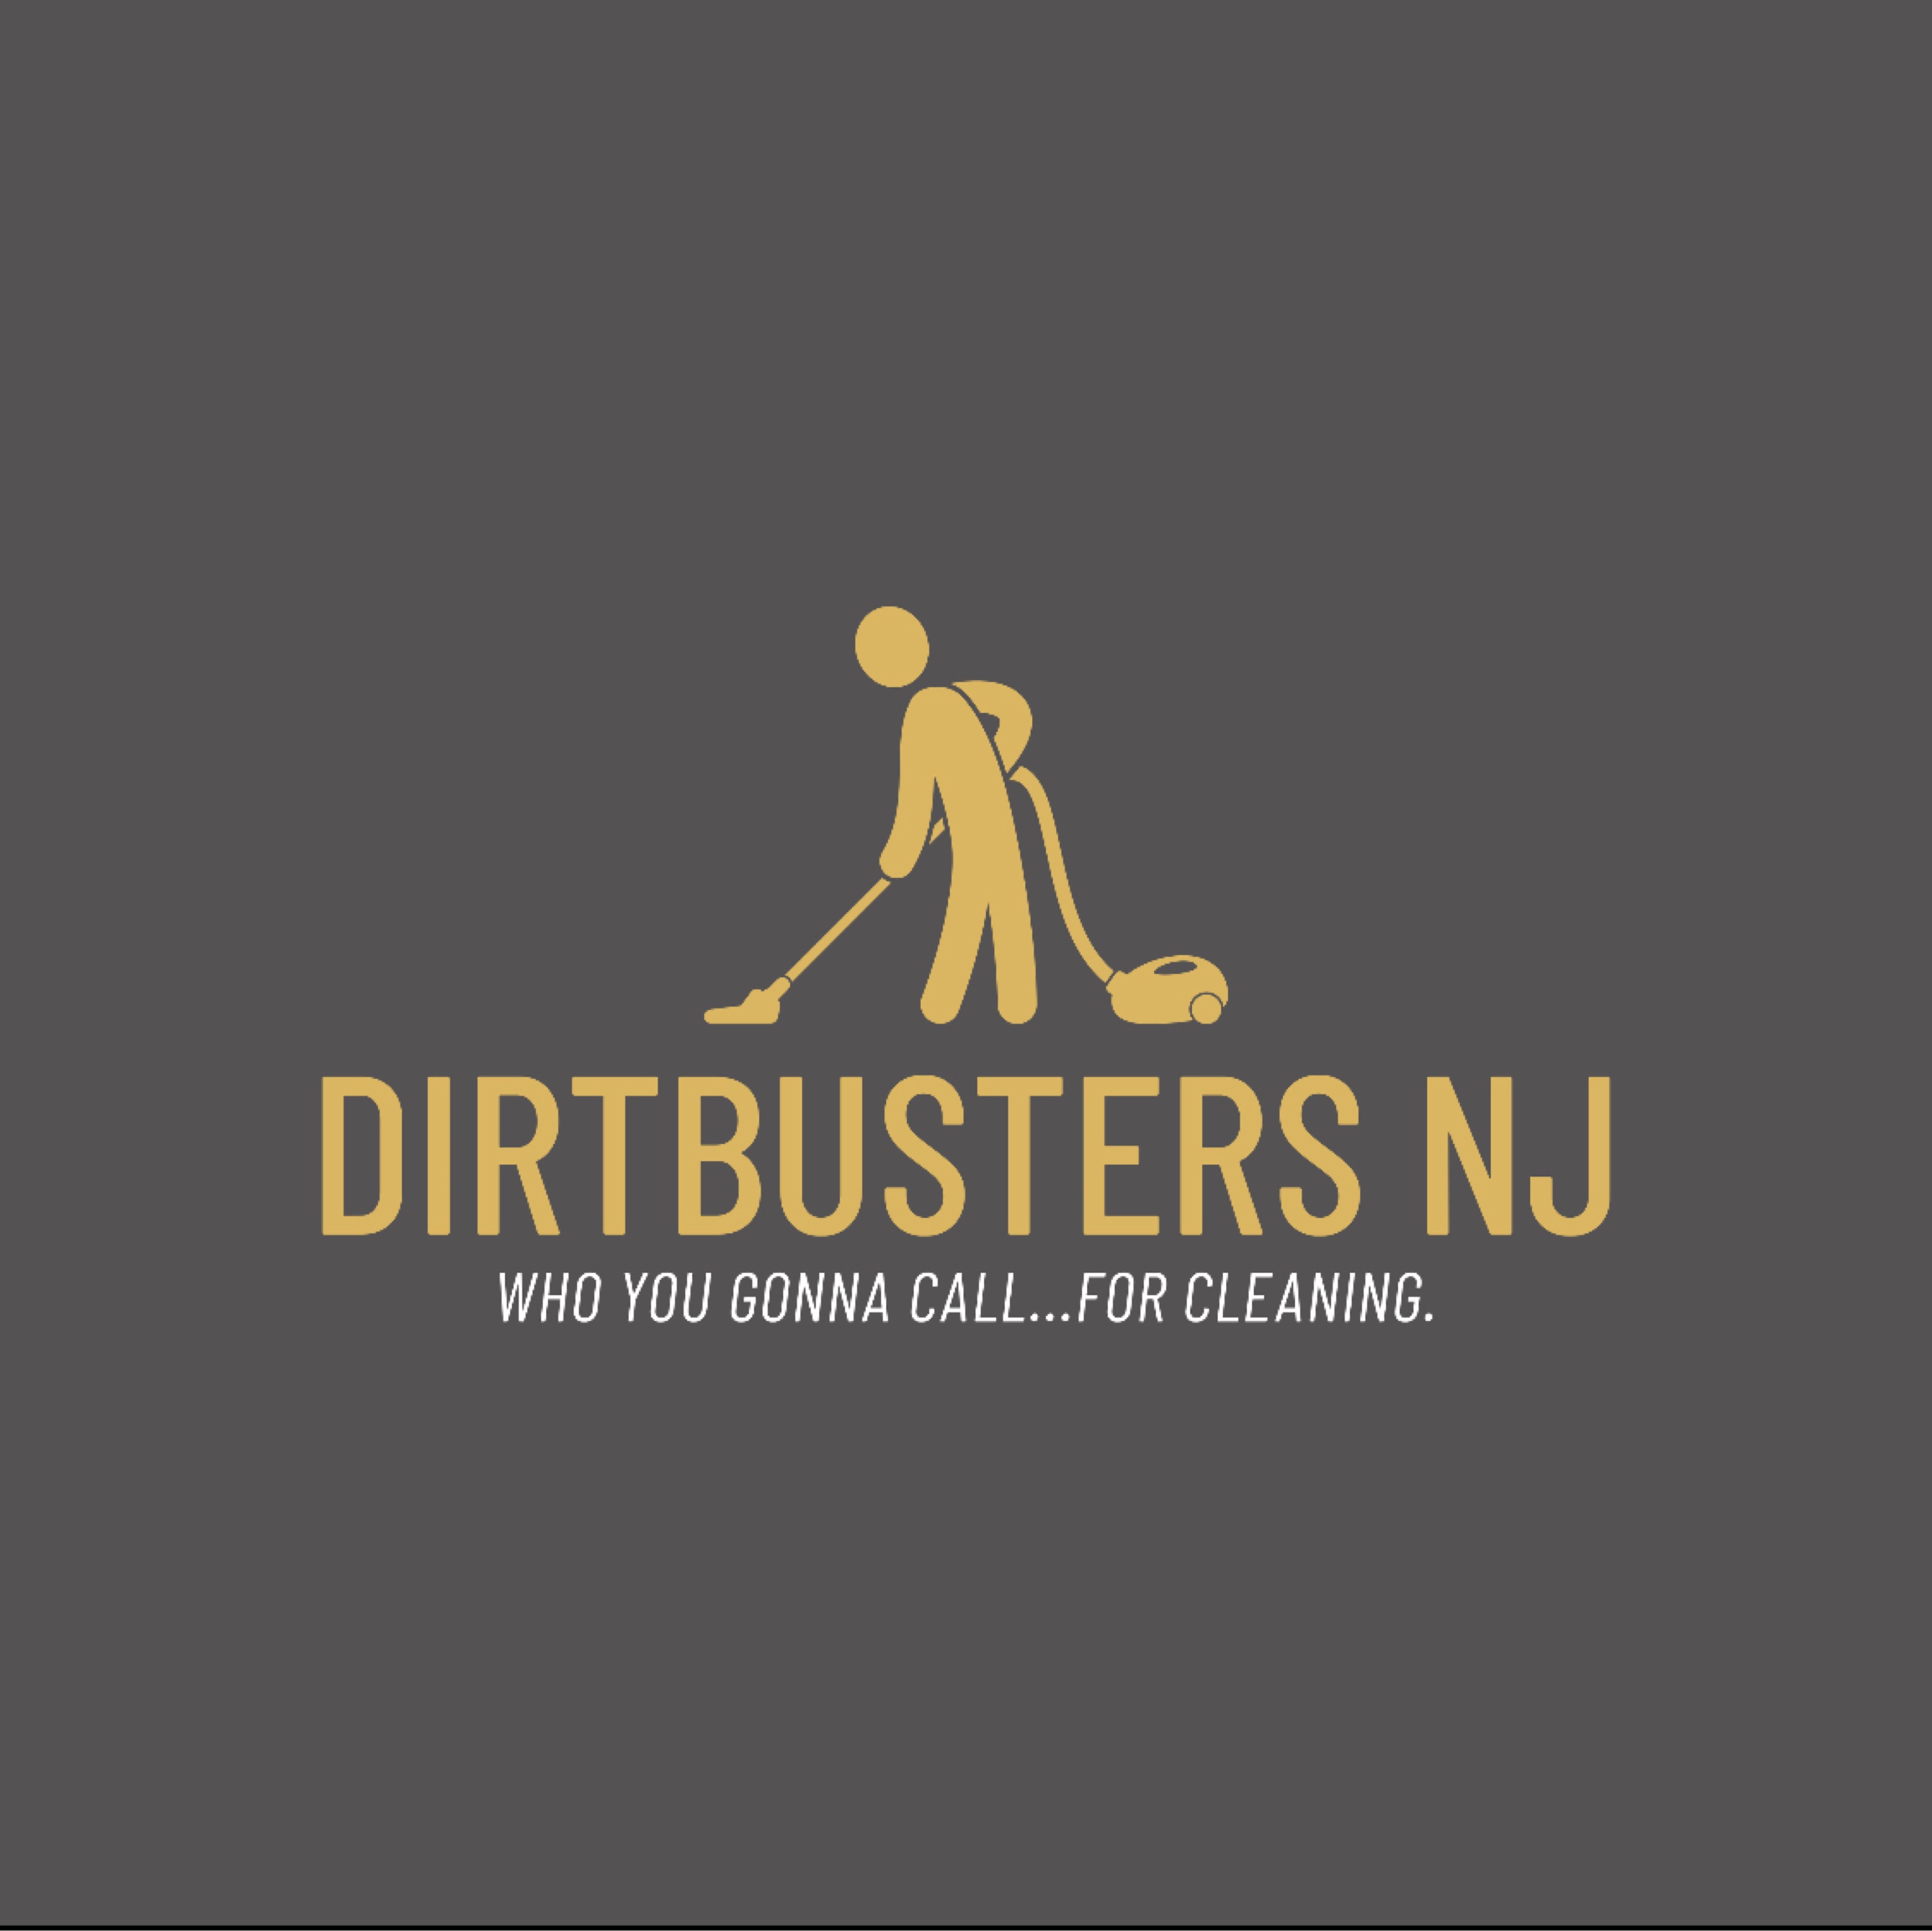 Dirtbusters NJ Logo